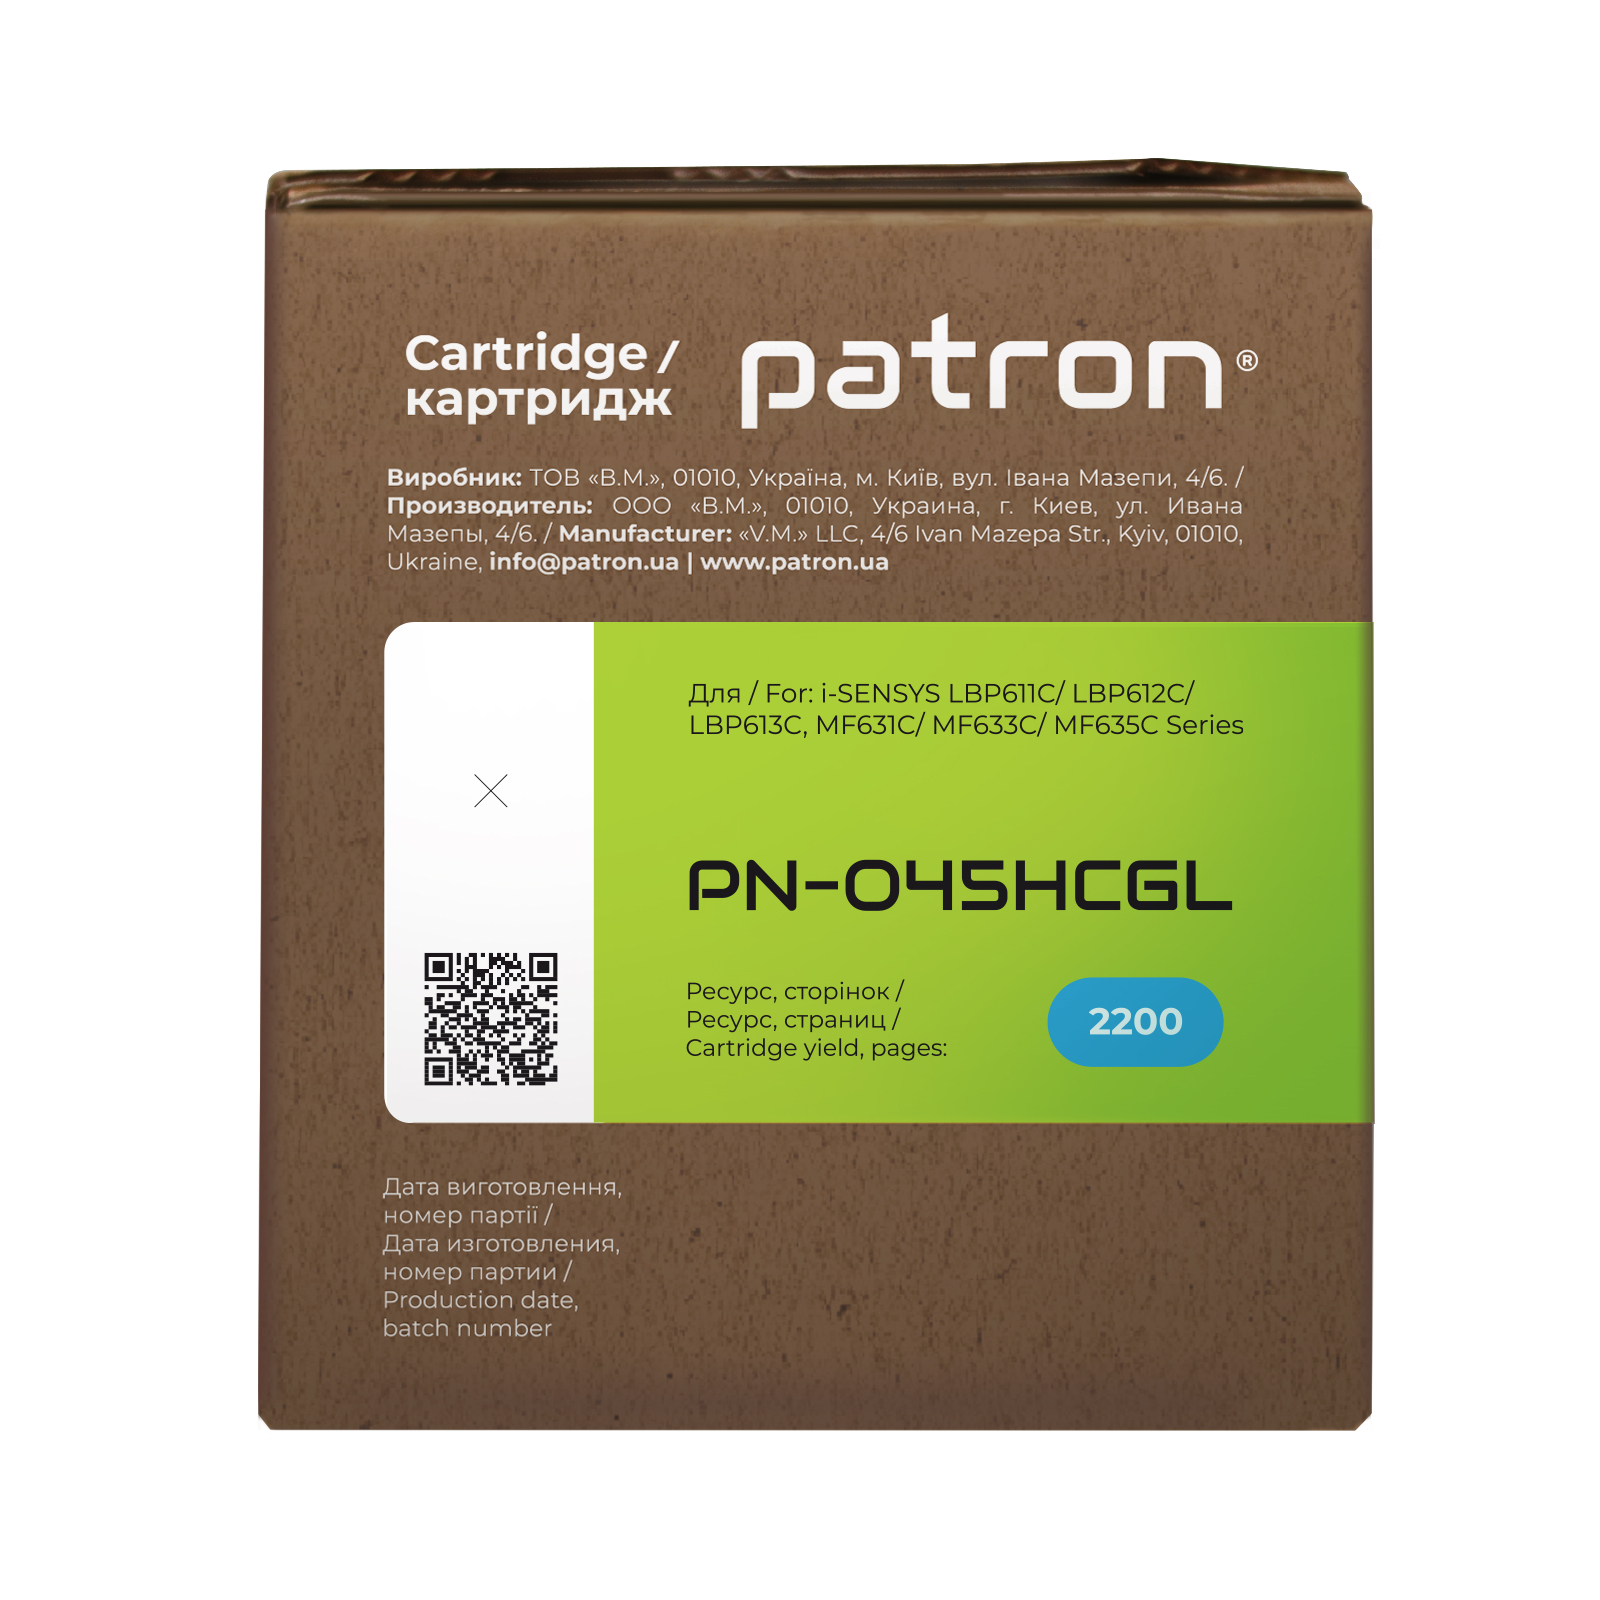 Картридж Patron CANON 045 BLACK GREEN Label (PN-045KGL) изображение 3